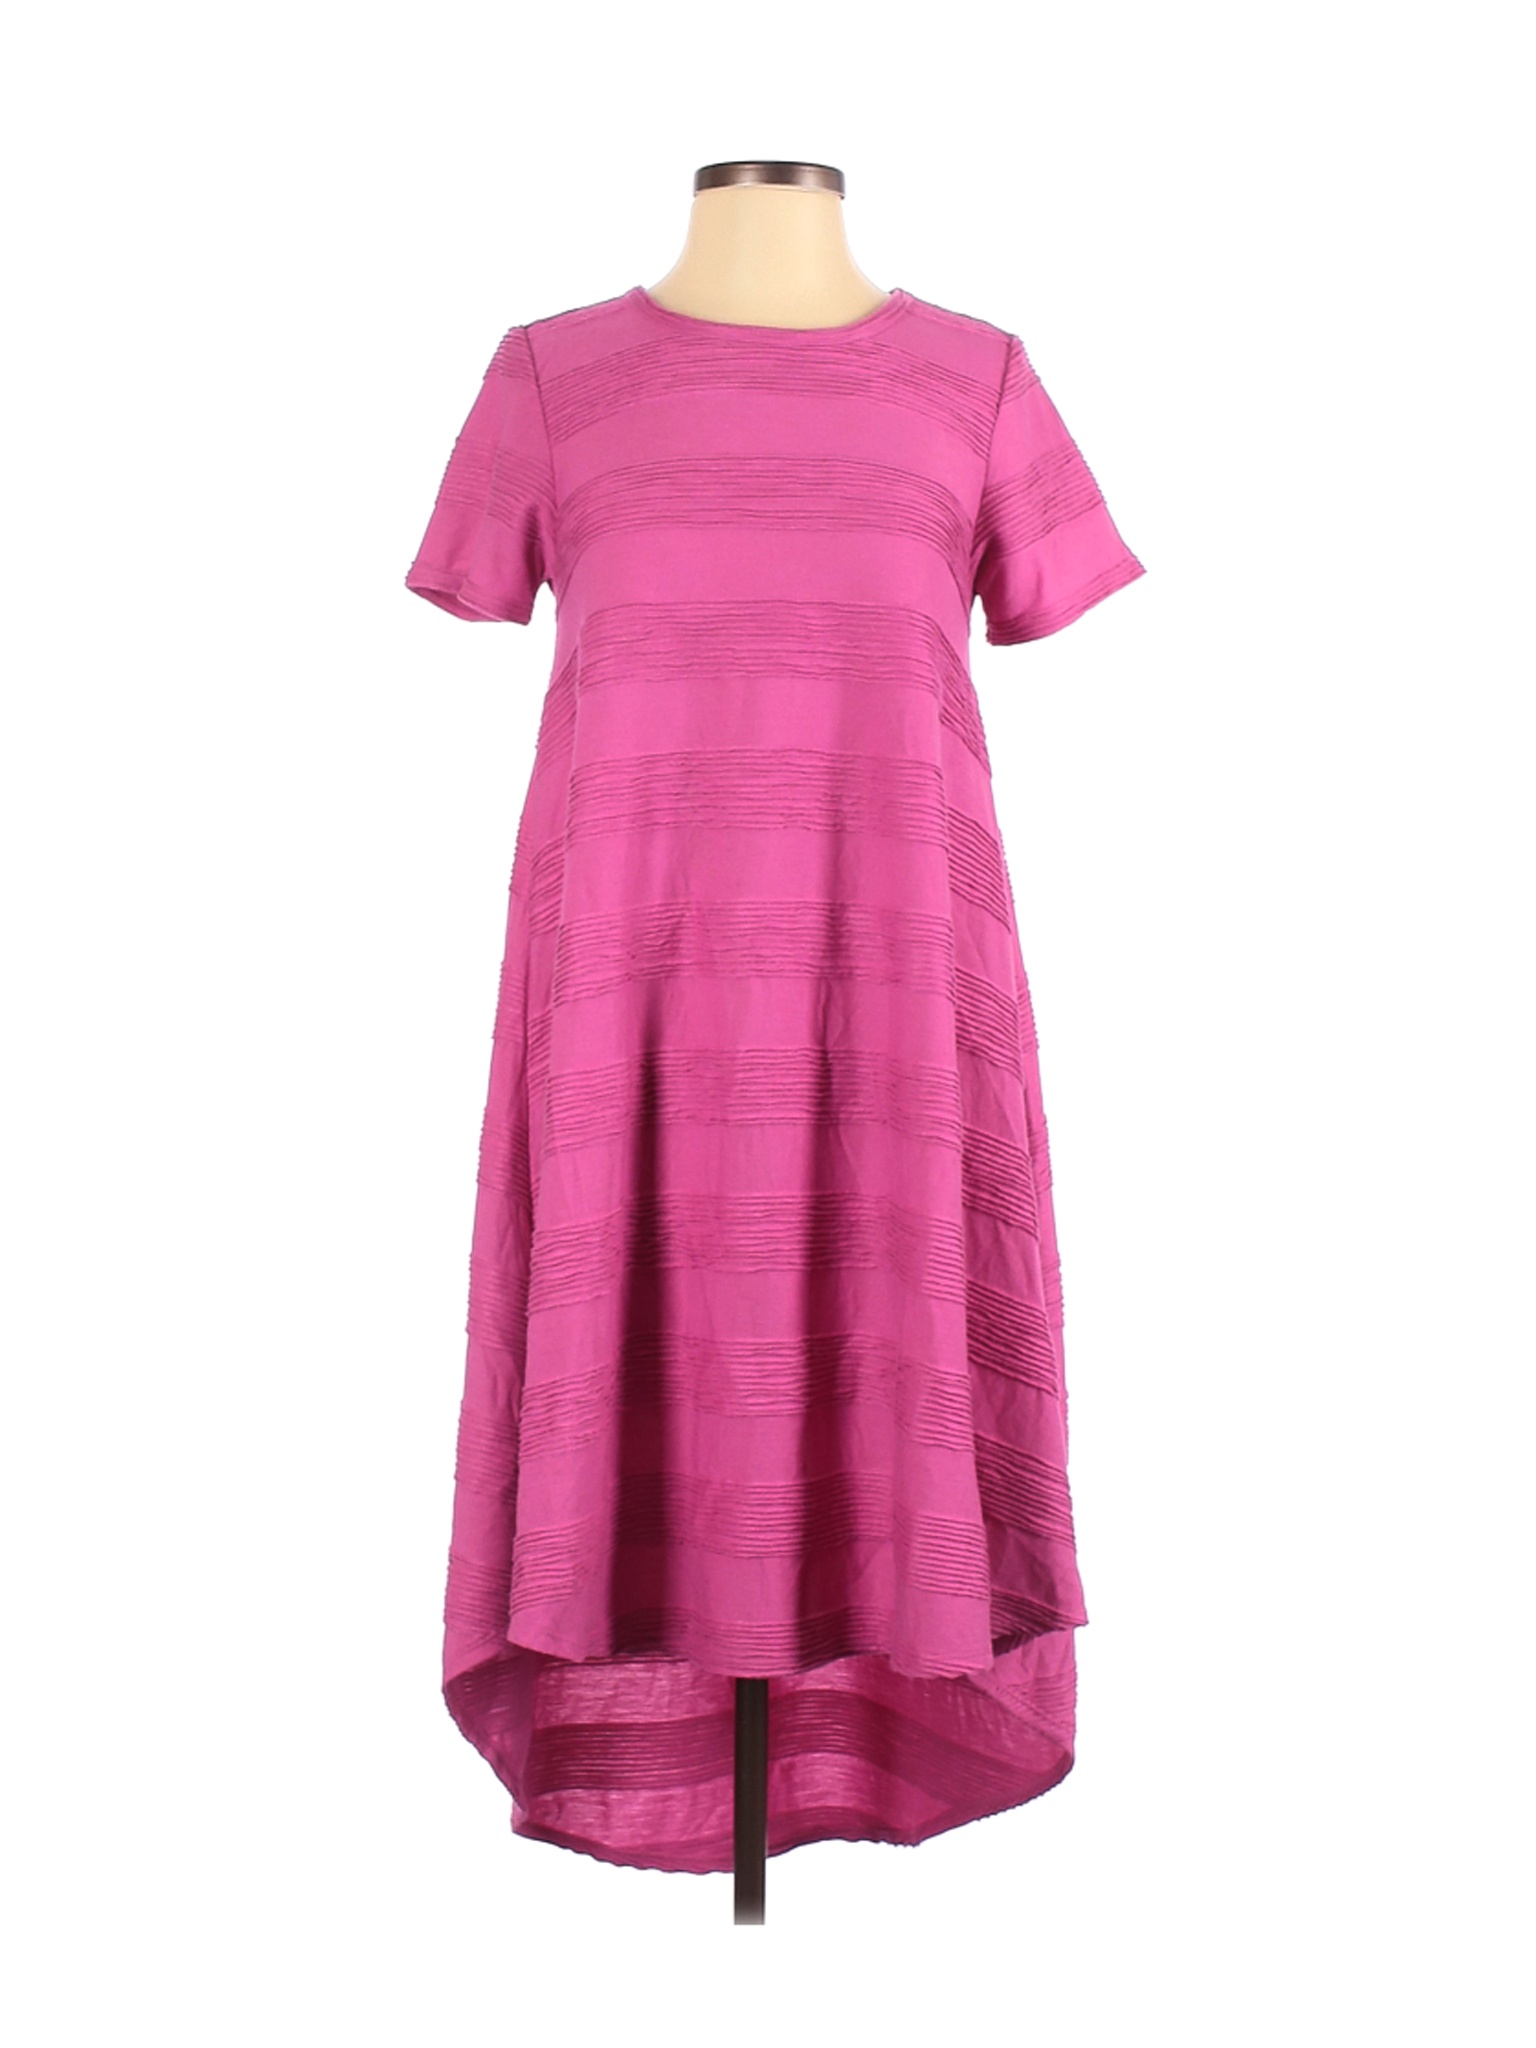 Lularoe Women Pink Casual Dress XS | eBay